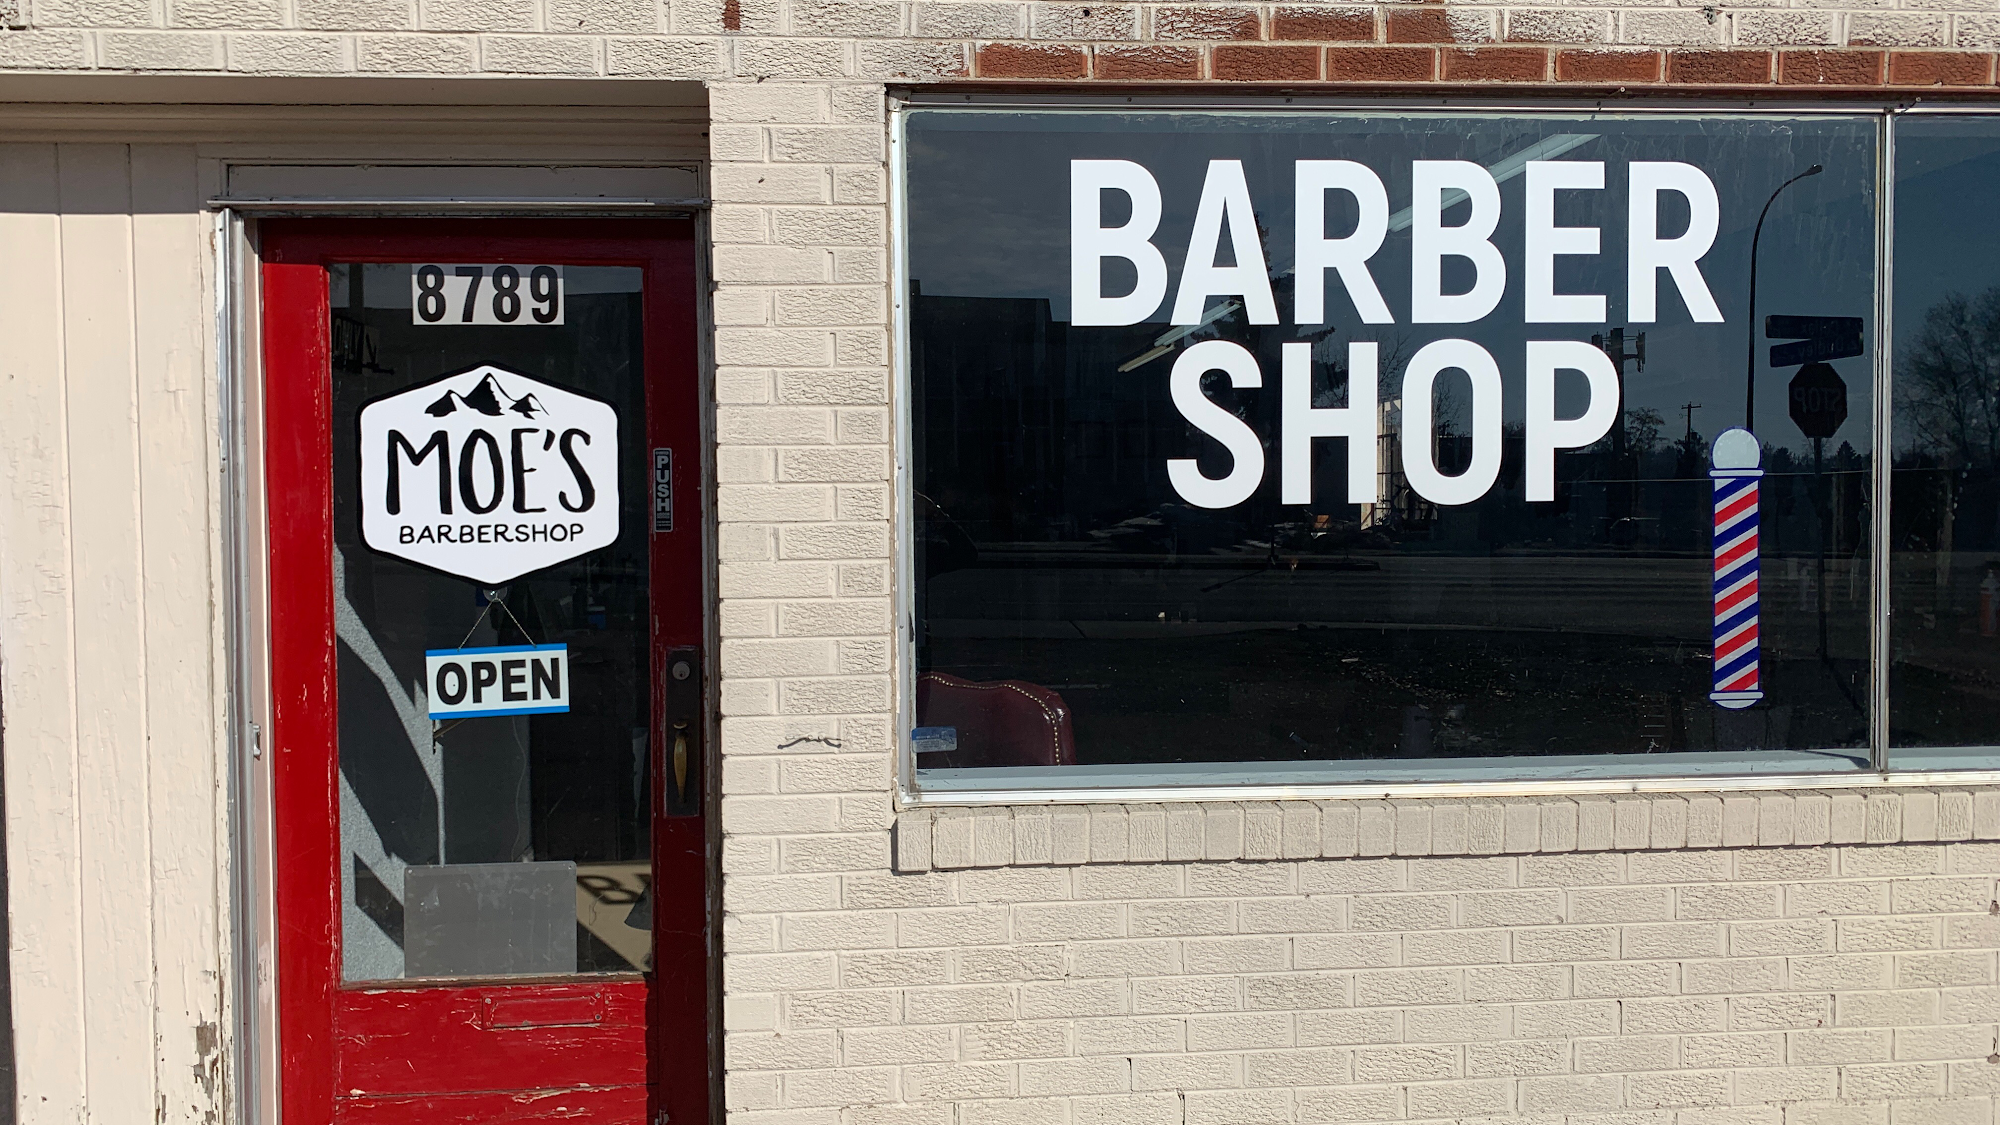 Moe's Barbershop